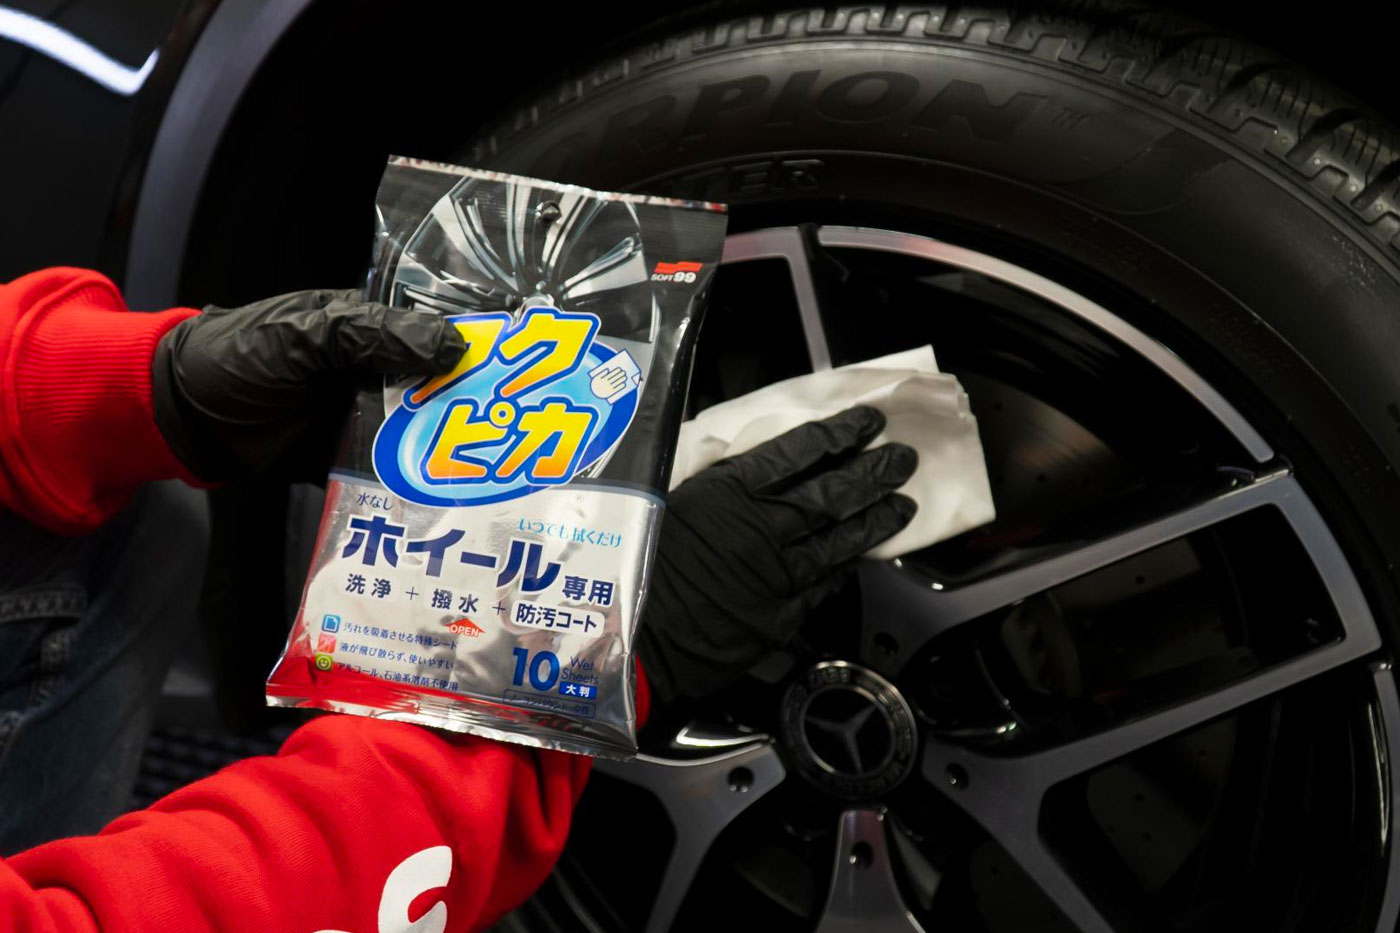 Fukupika Wheel Cleaning Wipes, wipes for rims, 10pcs. 4